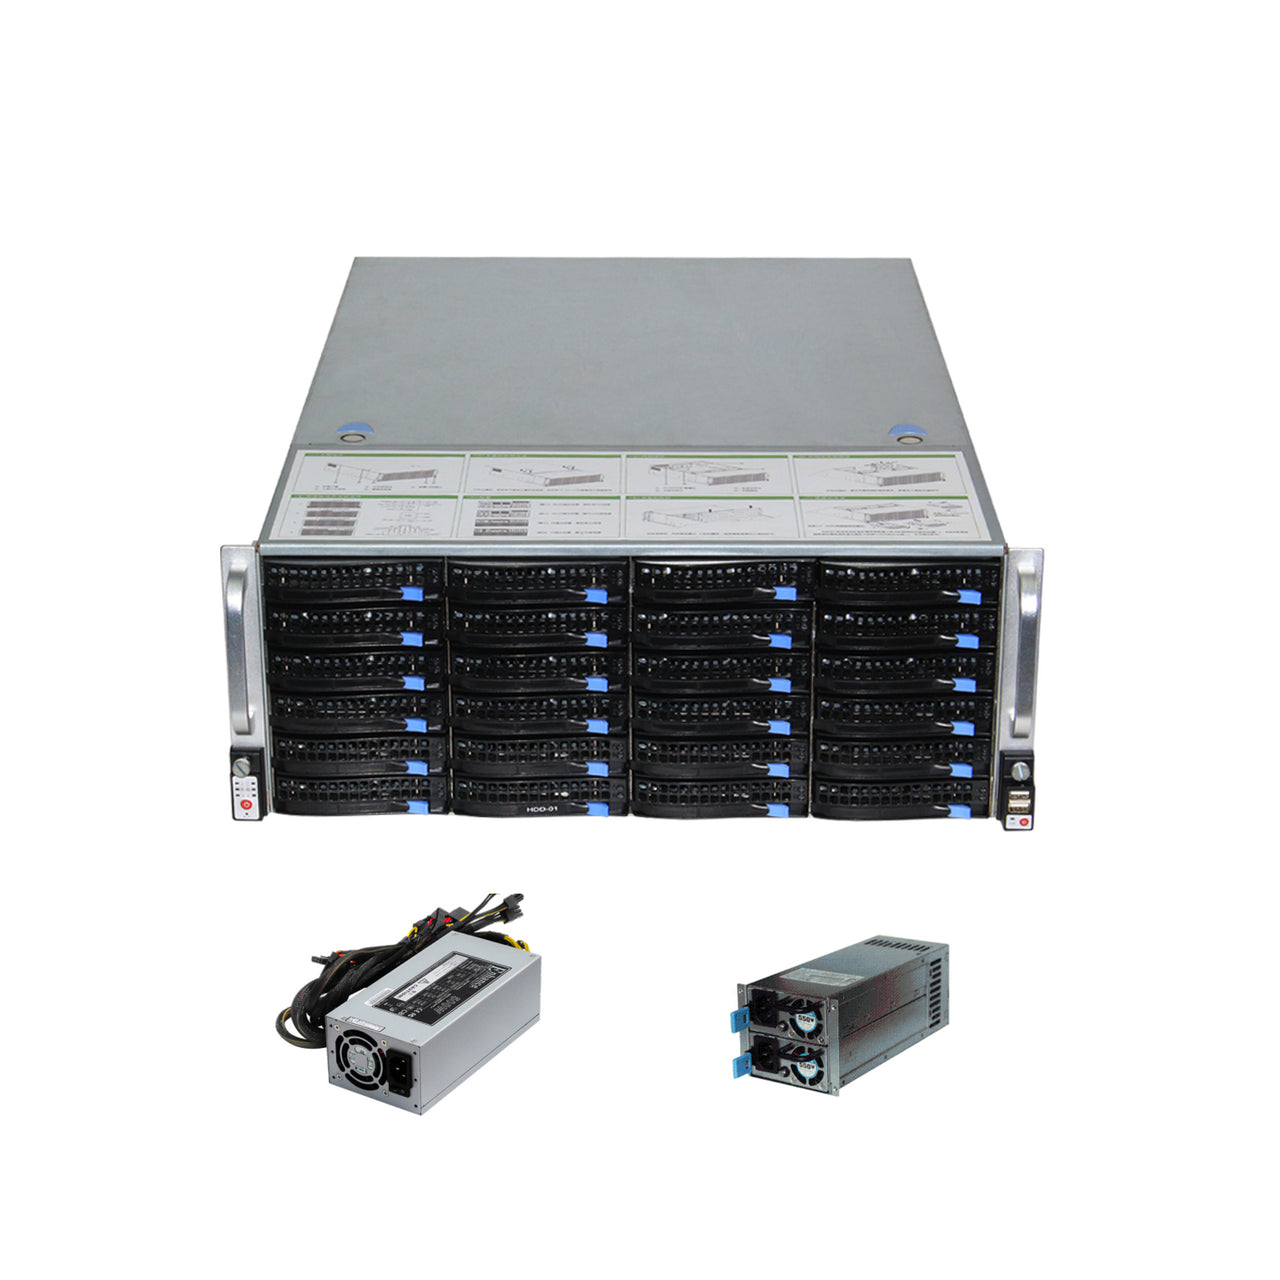 JideTech X86 Super NVR, Centralized Storage Management Device Support 256pcs Cameras Input(NVSS8724-256)